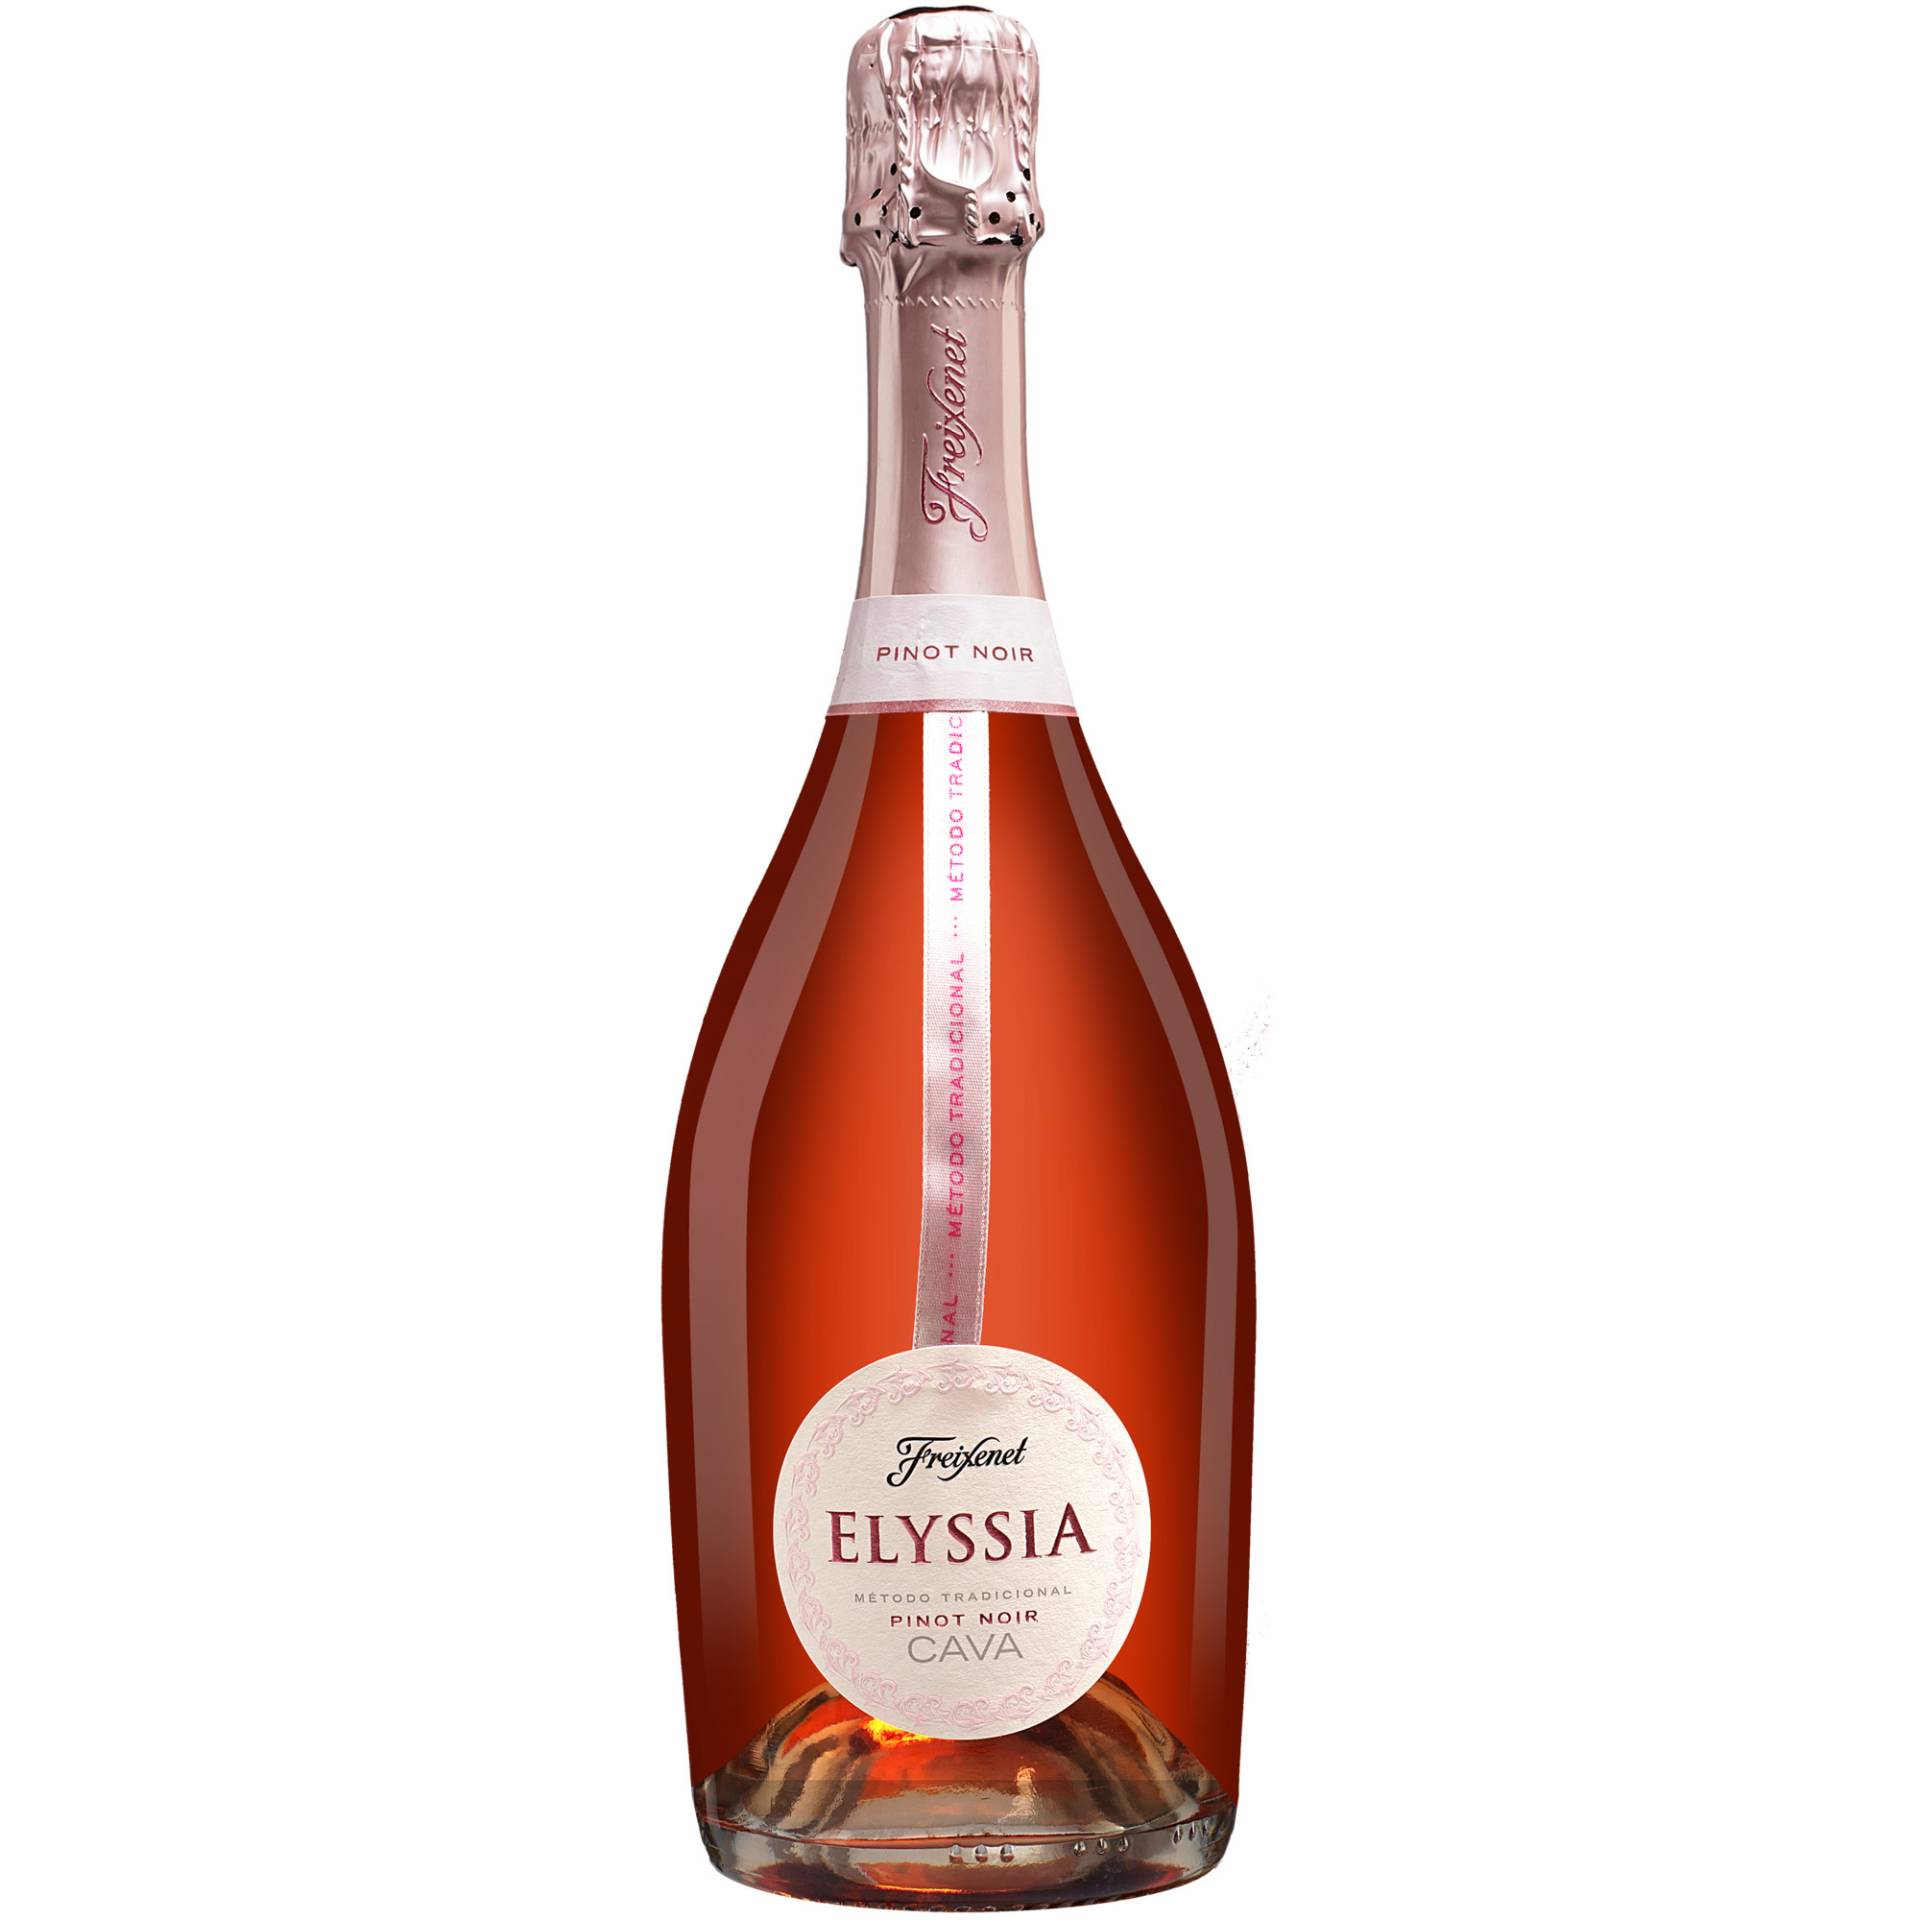 Freixenet Cava »Elyssia« Pinot Noir Brut  0.75L 12% Vol. Trocken aus Spanien von Freixenet